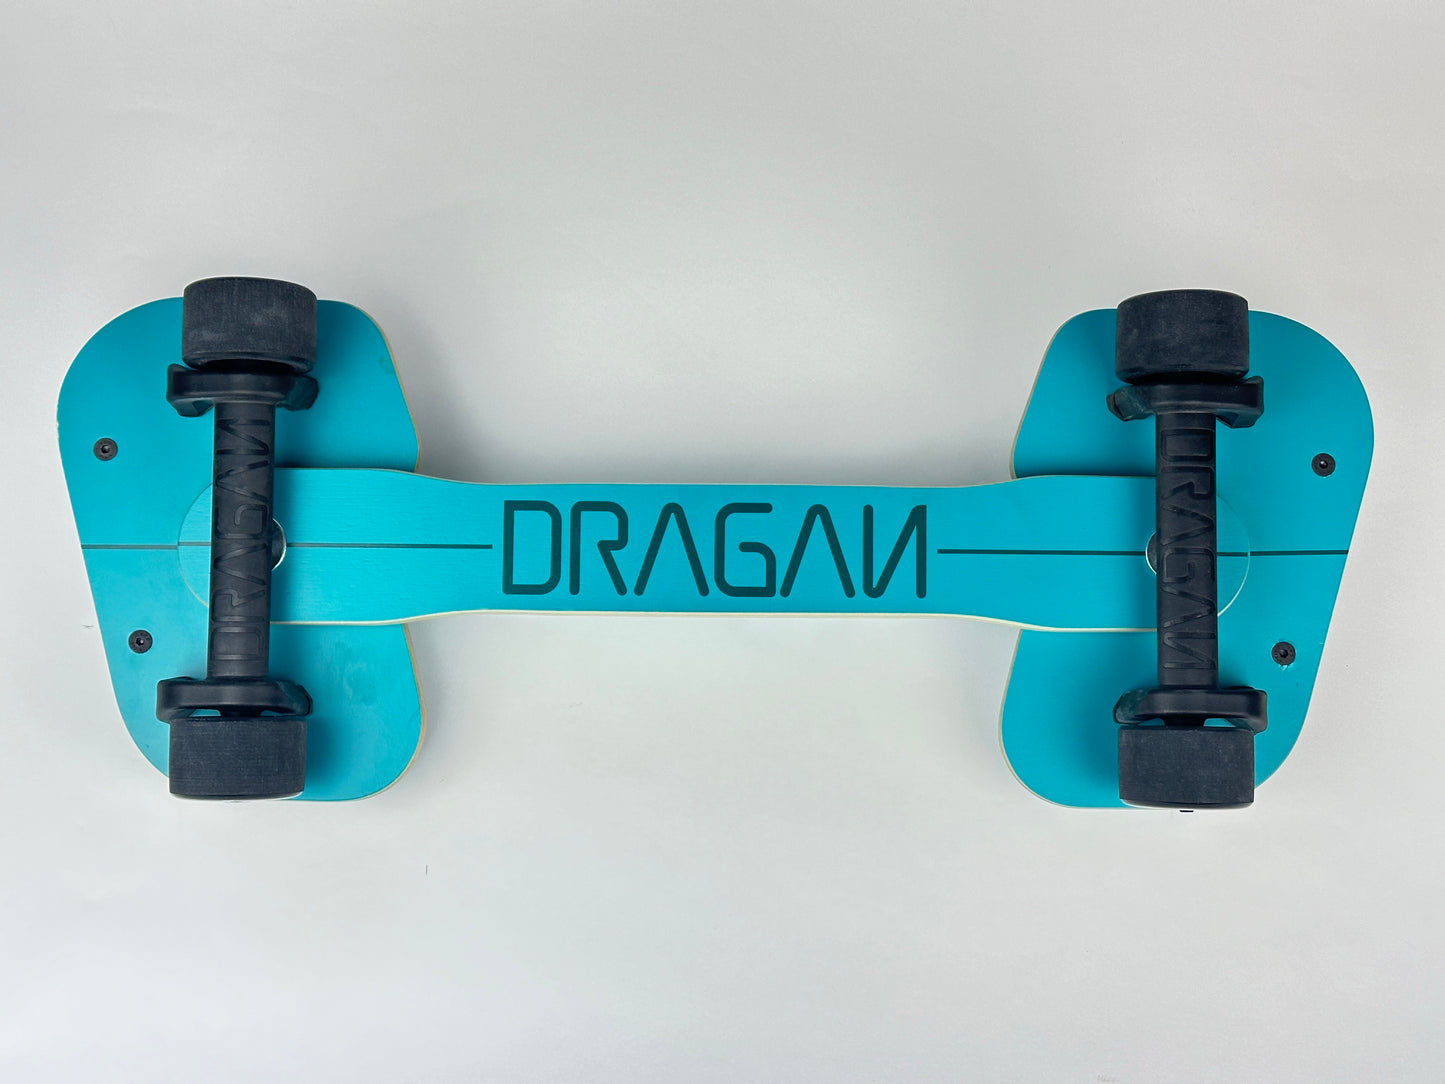 The Dragan Cruiser Streetboard: Teal Edition